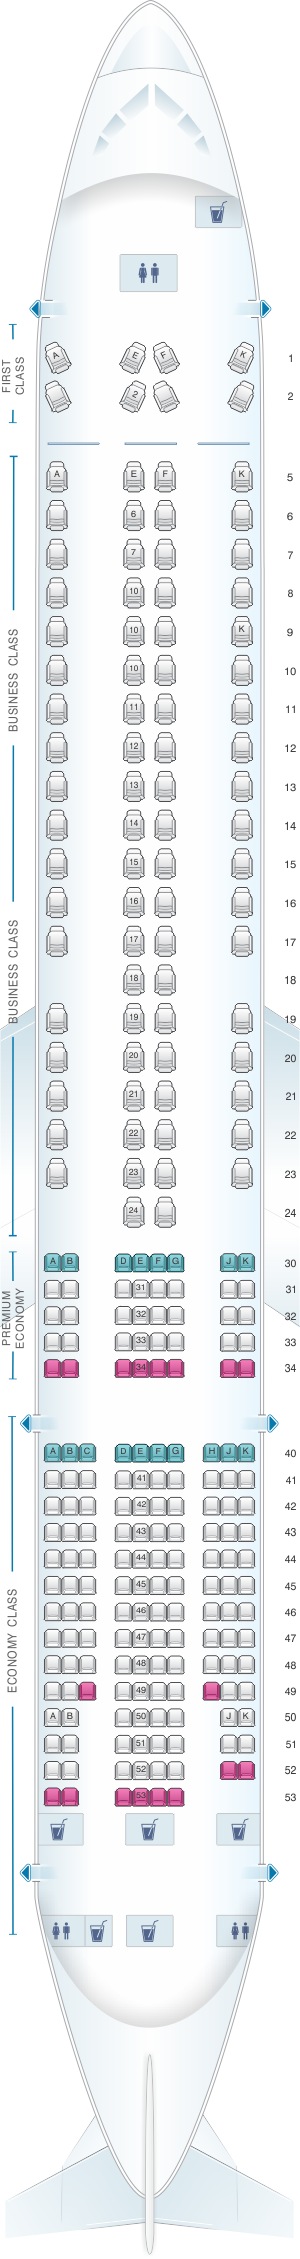 Seat map for British Airways Boeing B777 300 V2